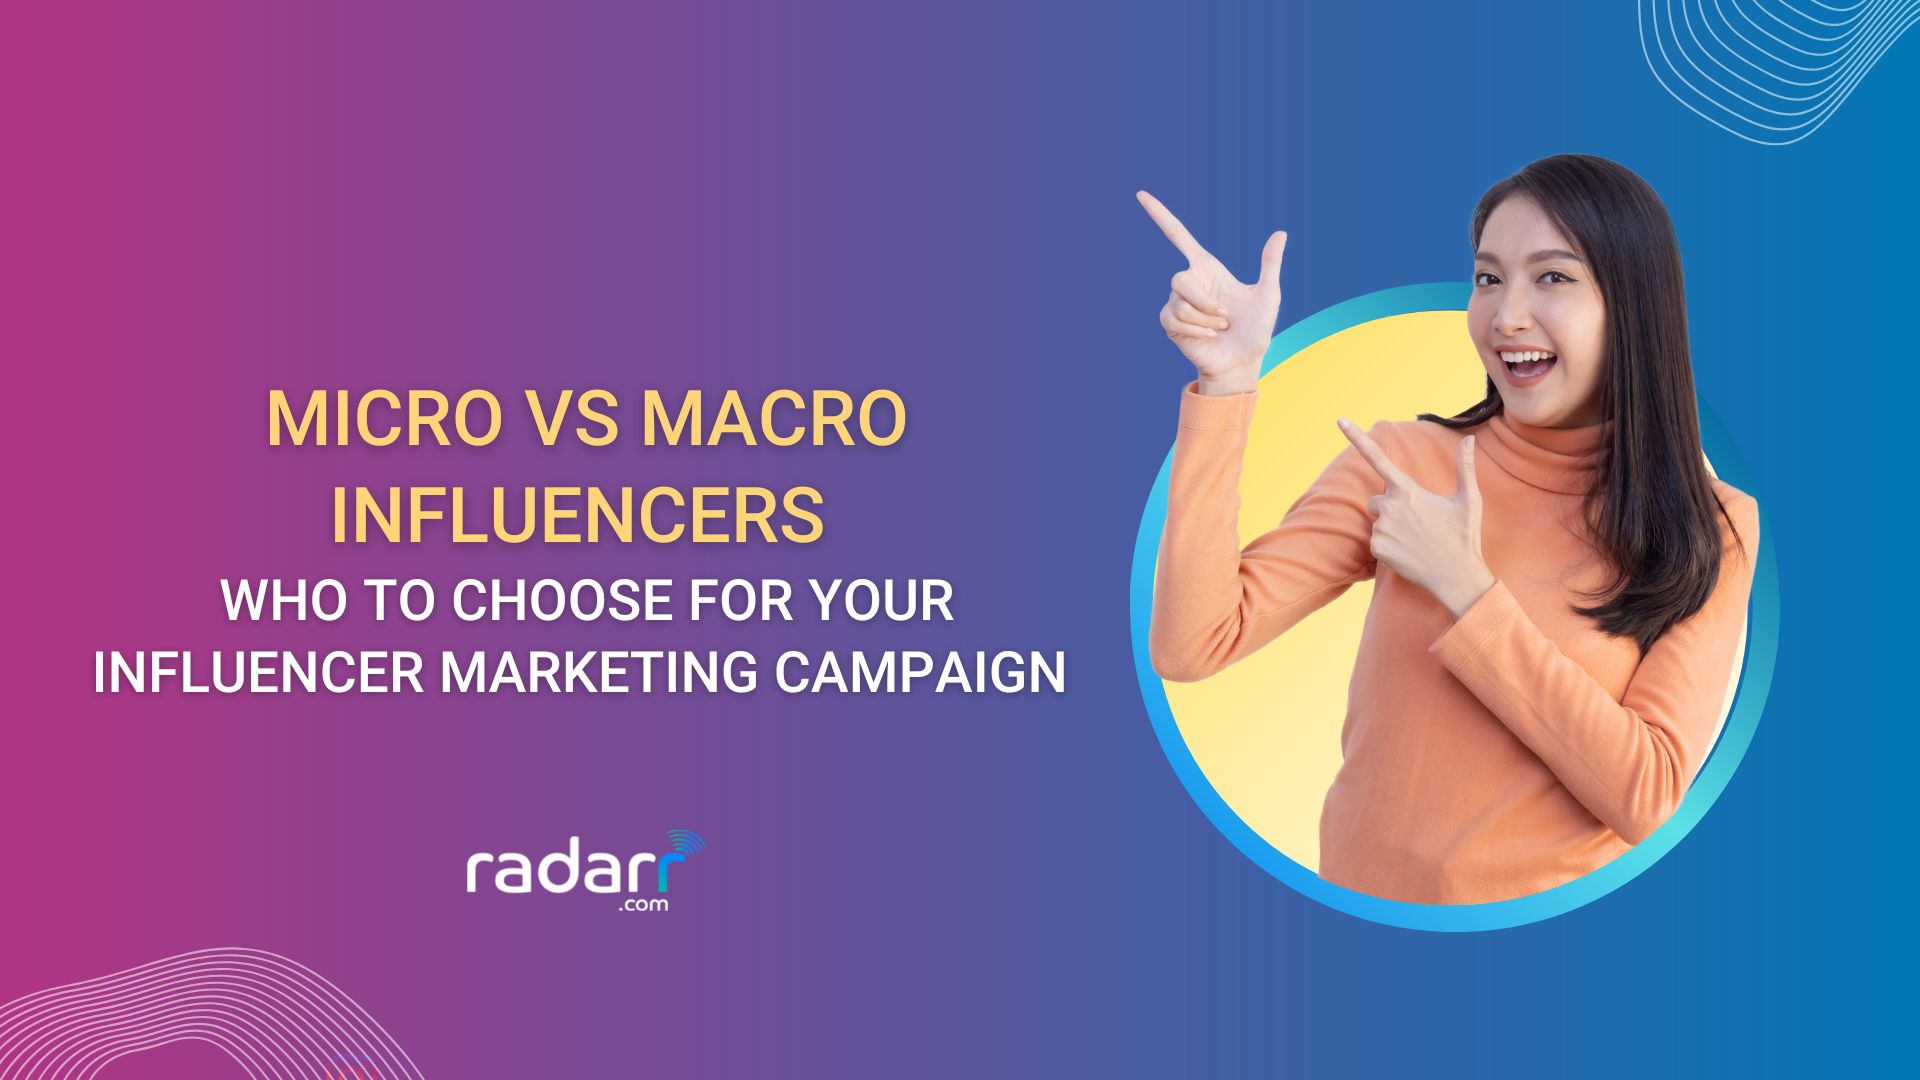 micro-influencers vs macro-influencers